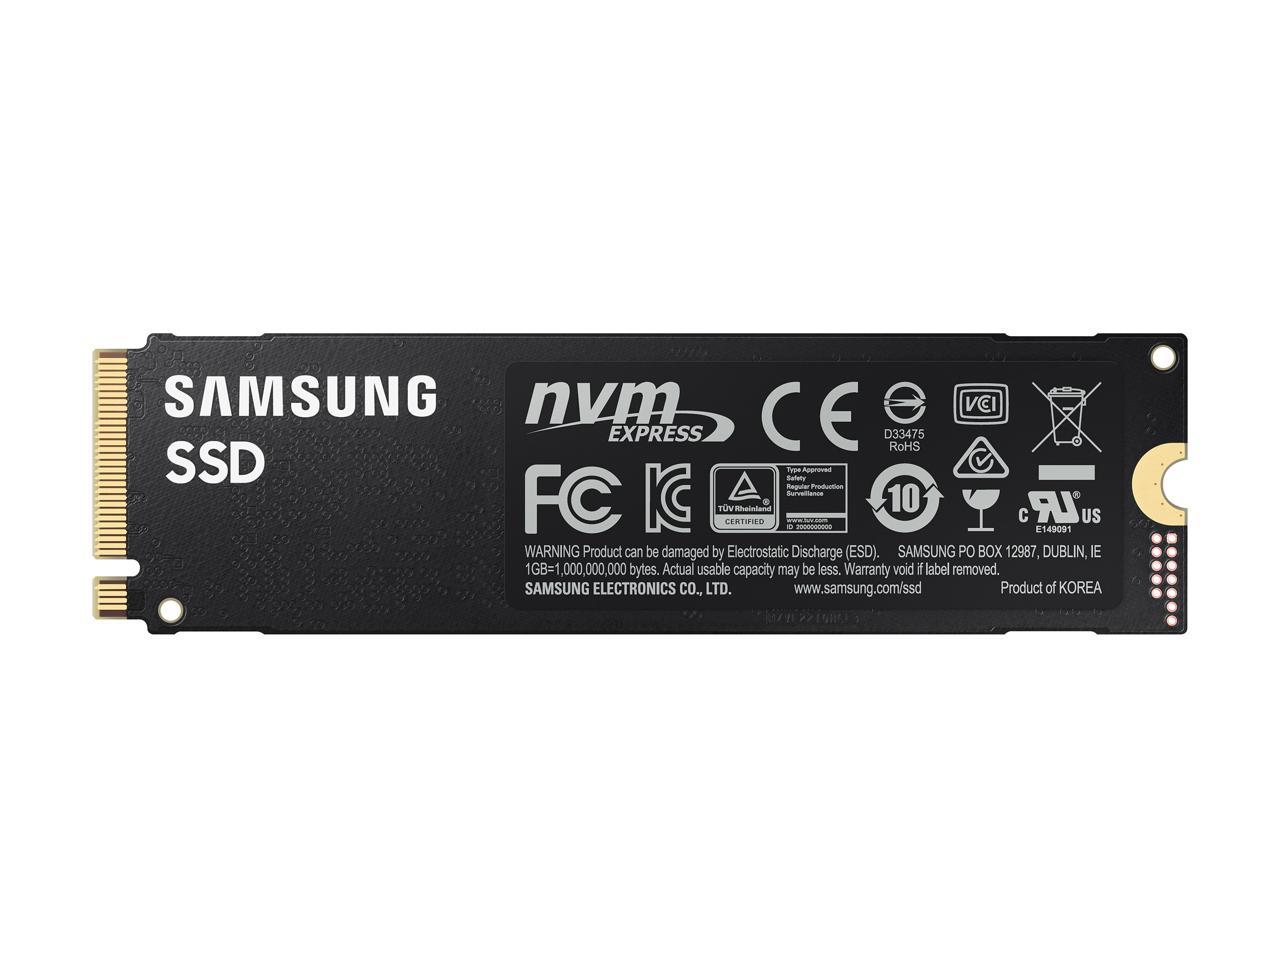 SAMSUNG 980 PRO M.2 2280 500GB PCI-Express Gen 4.0 x4, NVMe 1.3c Samsung V-NAND Internal Solid State Drive (SSD) MZ-V8P500B/AM